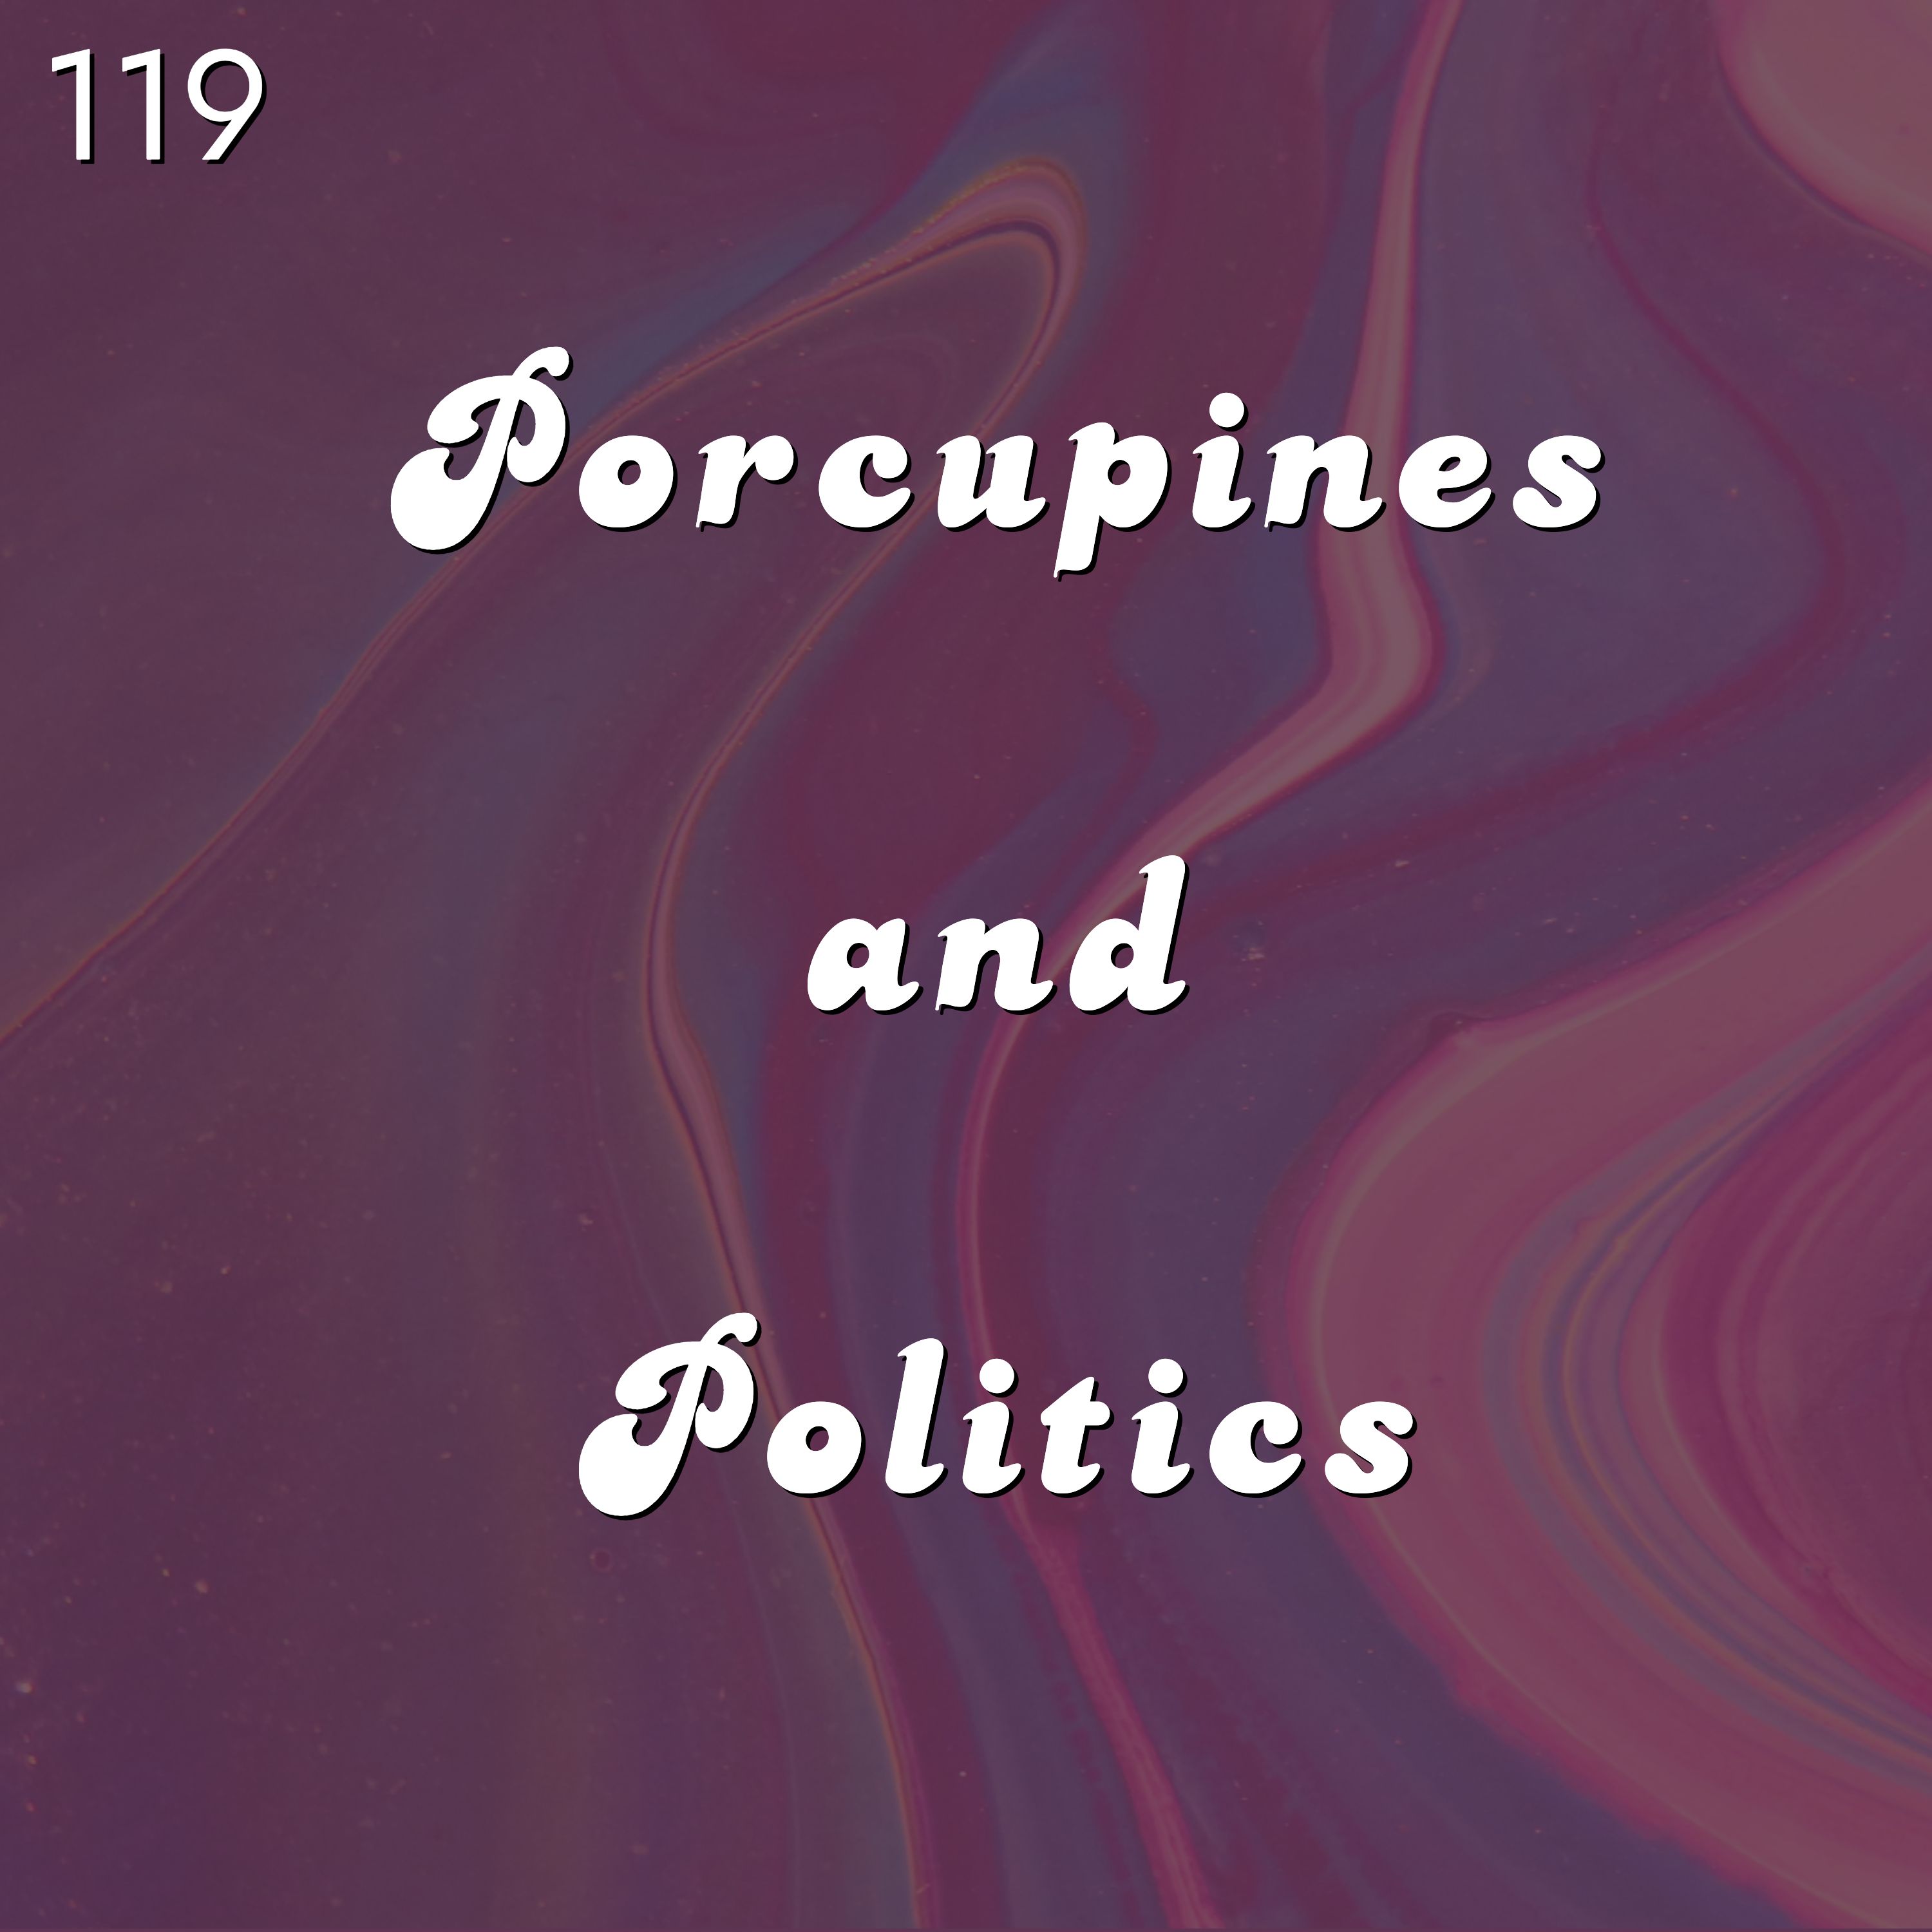 #119 - Porcupines and Politics